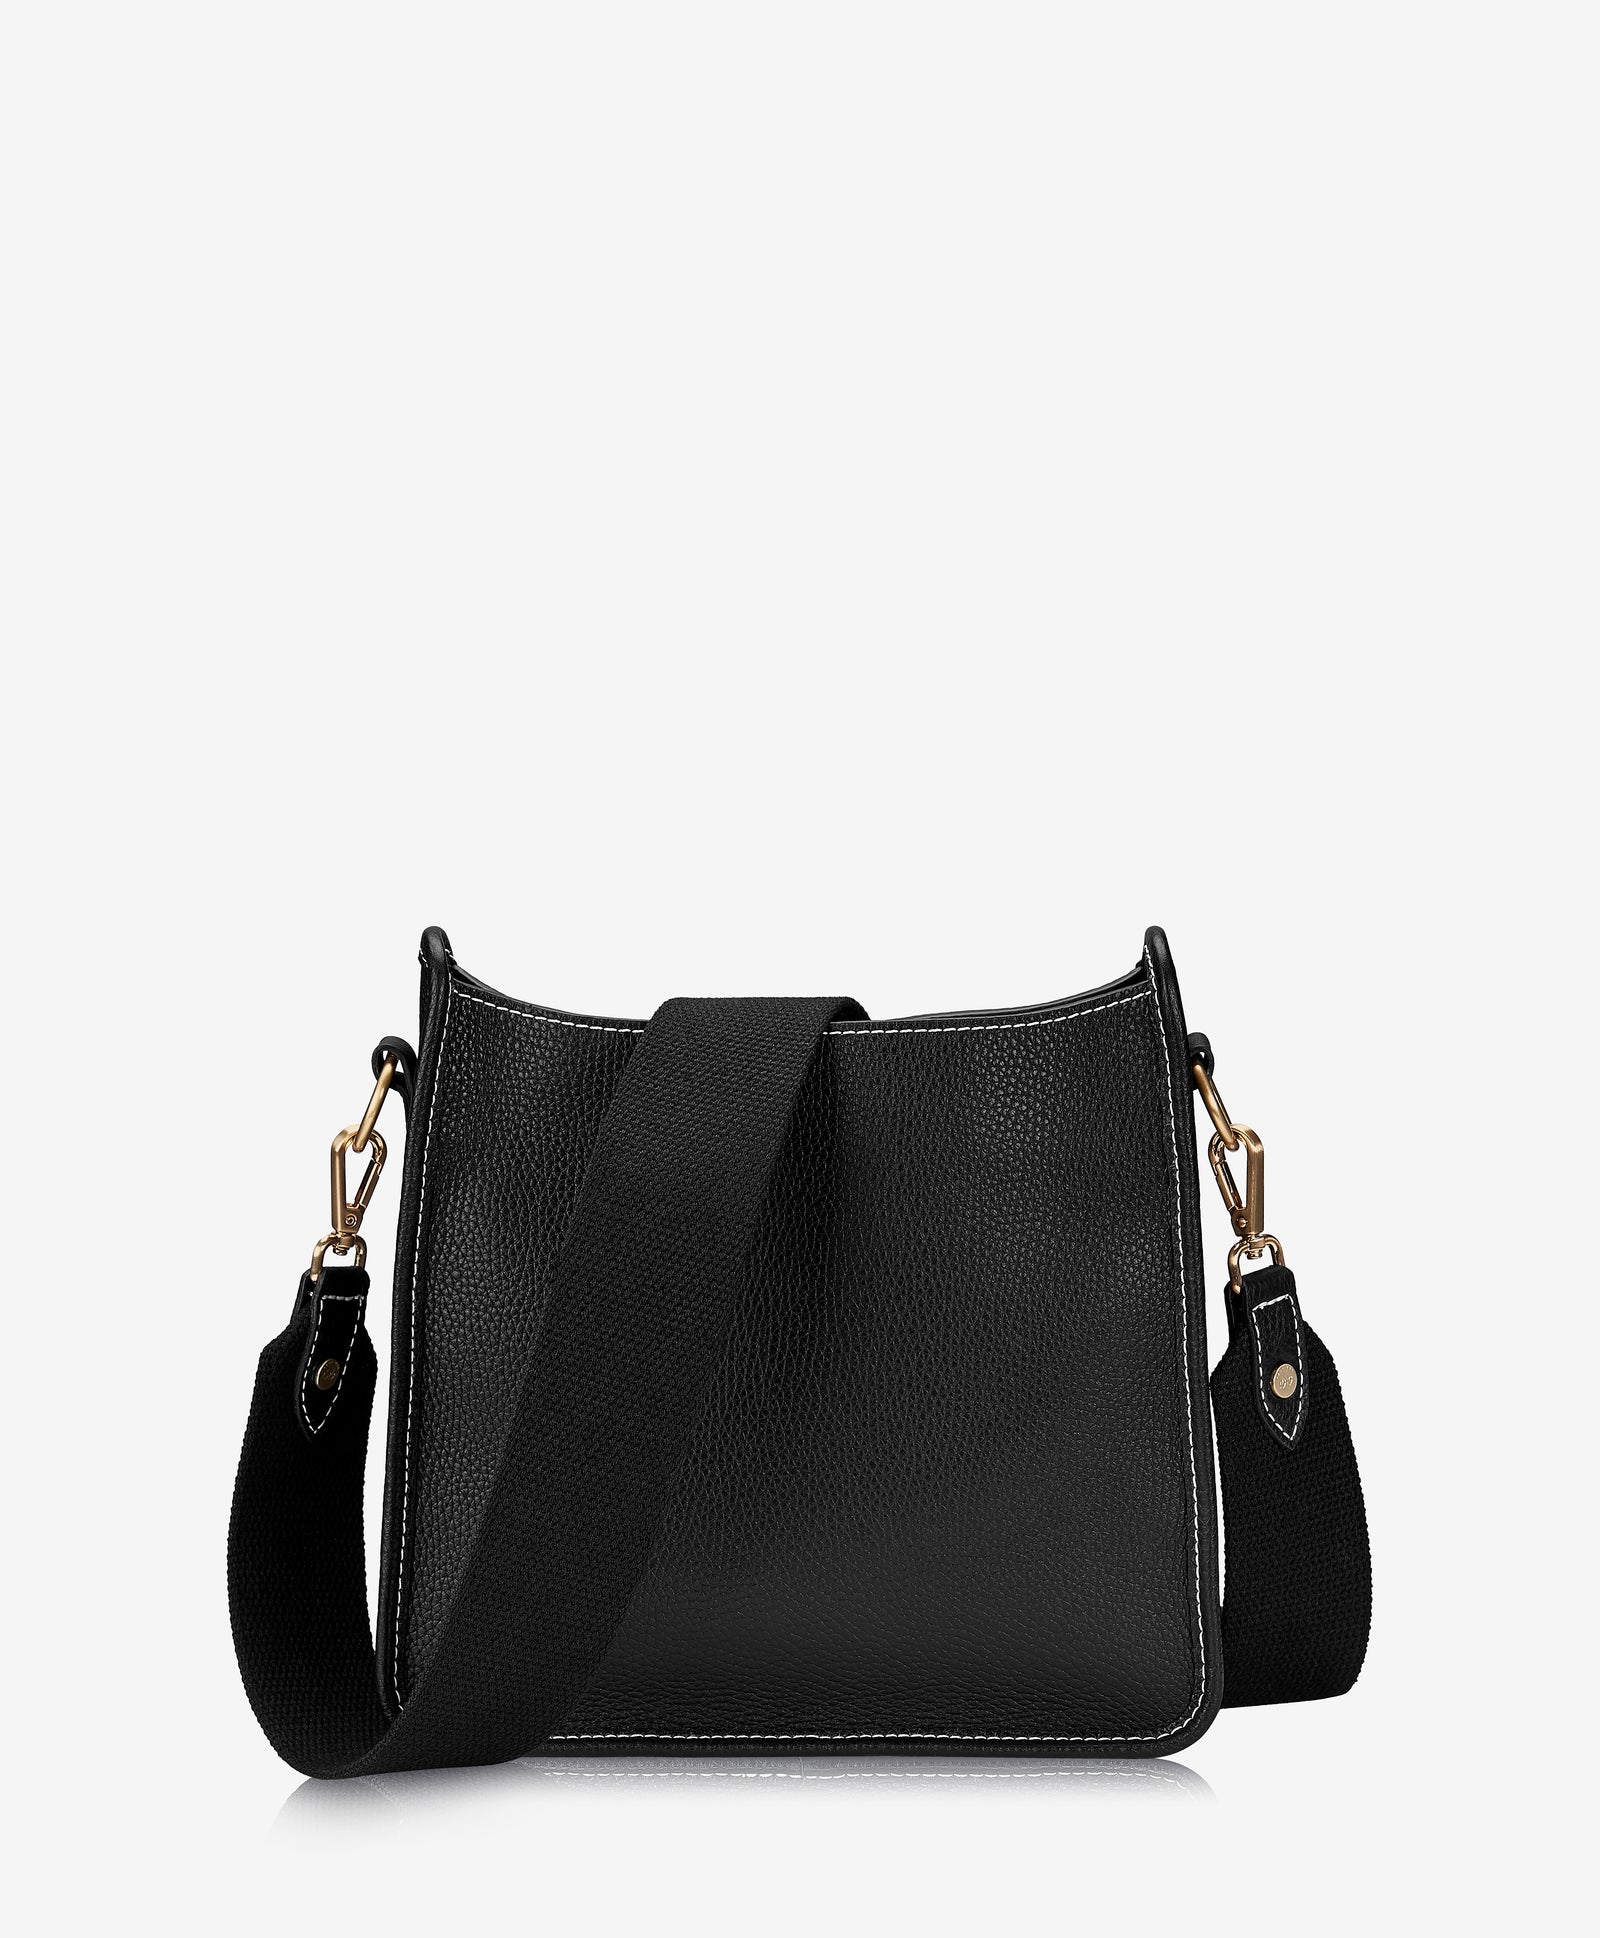 Handmade Leather Bags | Designer Leather Handbags – Page 2